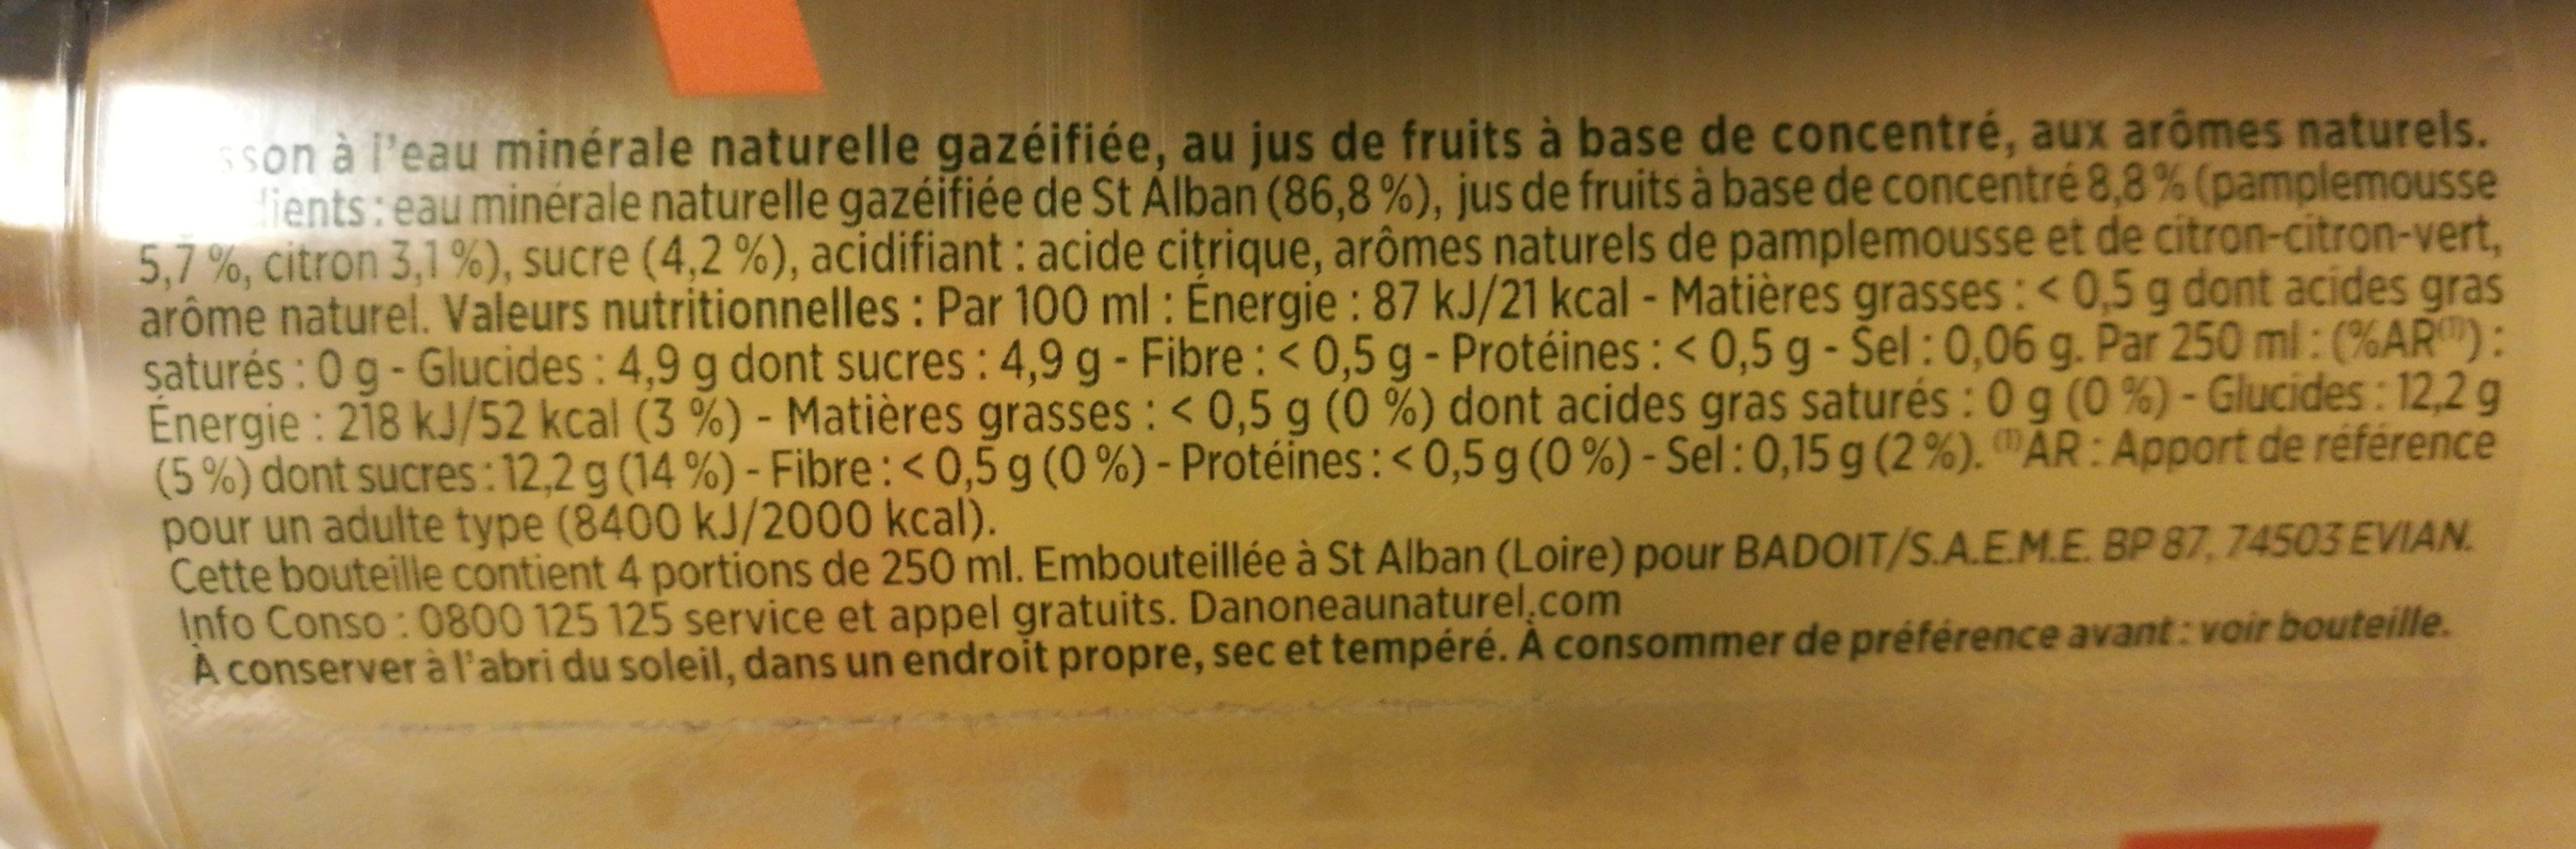 Bulles de fruits - Ingredients - fr